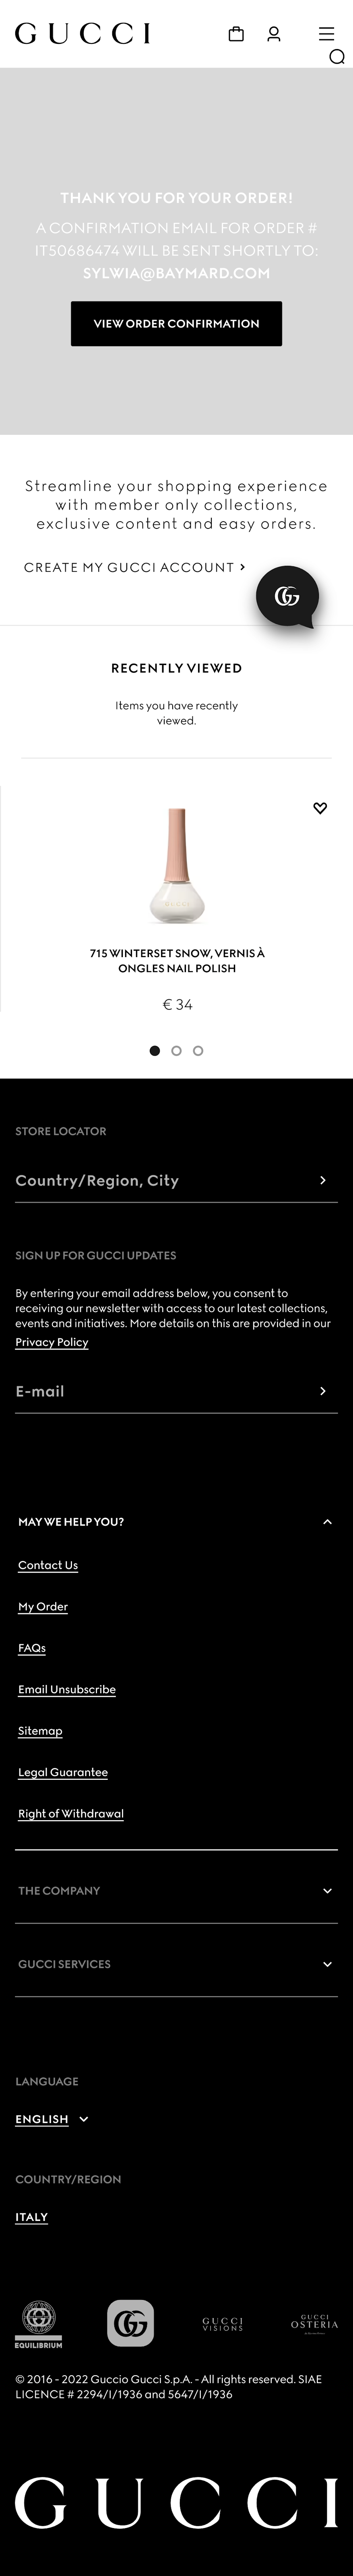 Mobile screenshot of Gucci